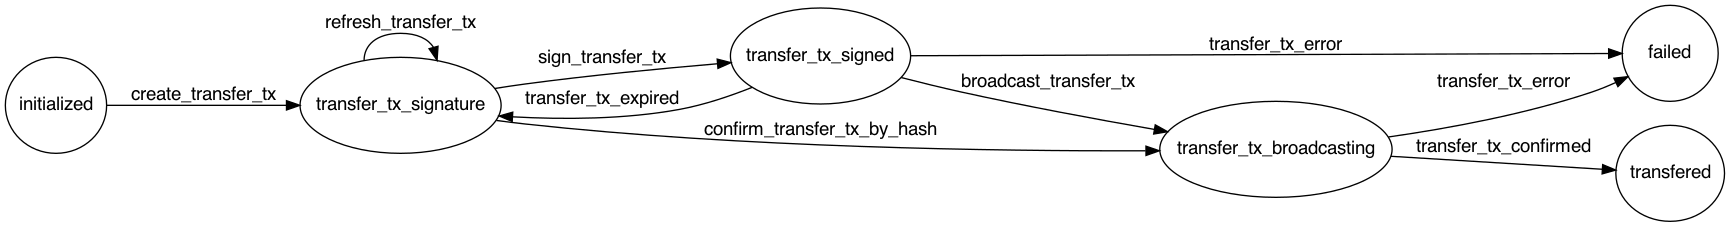 NEAR Transfer Flow Diagram